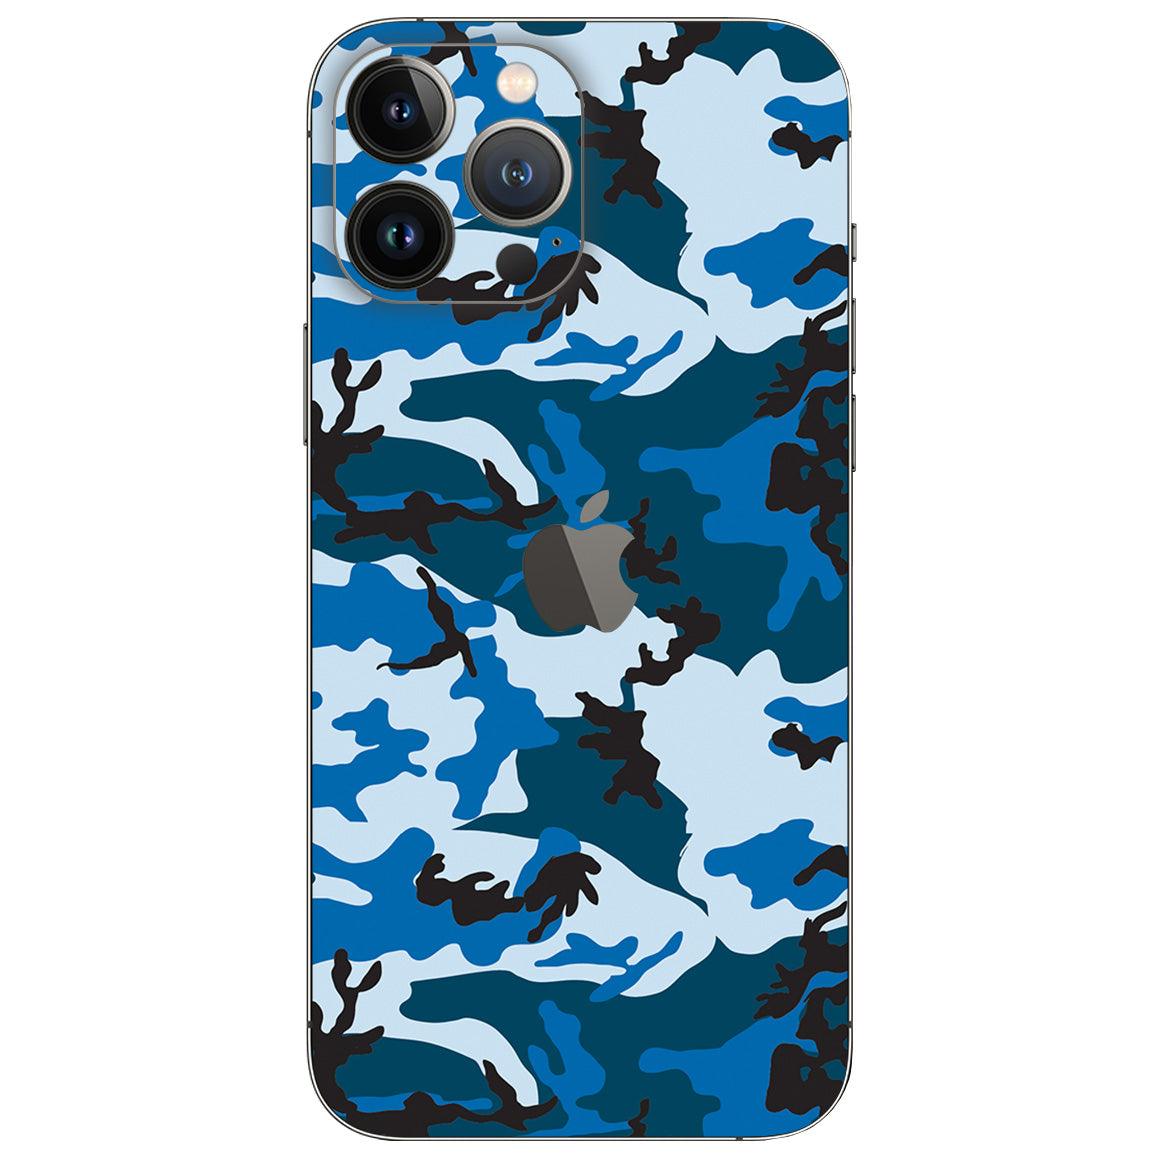 🌈Supreme camo iPhone 12 pro max case(blue camo) - Cases, Covers & Skins, Facebook Marketplace